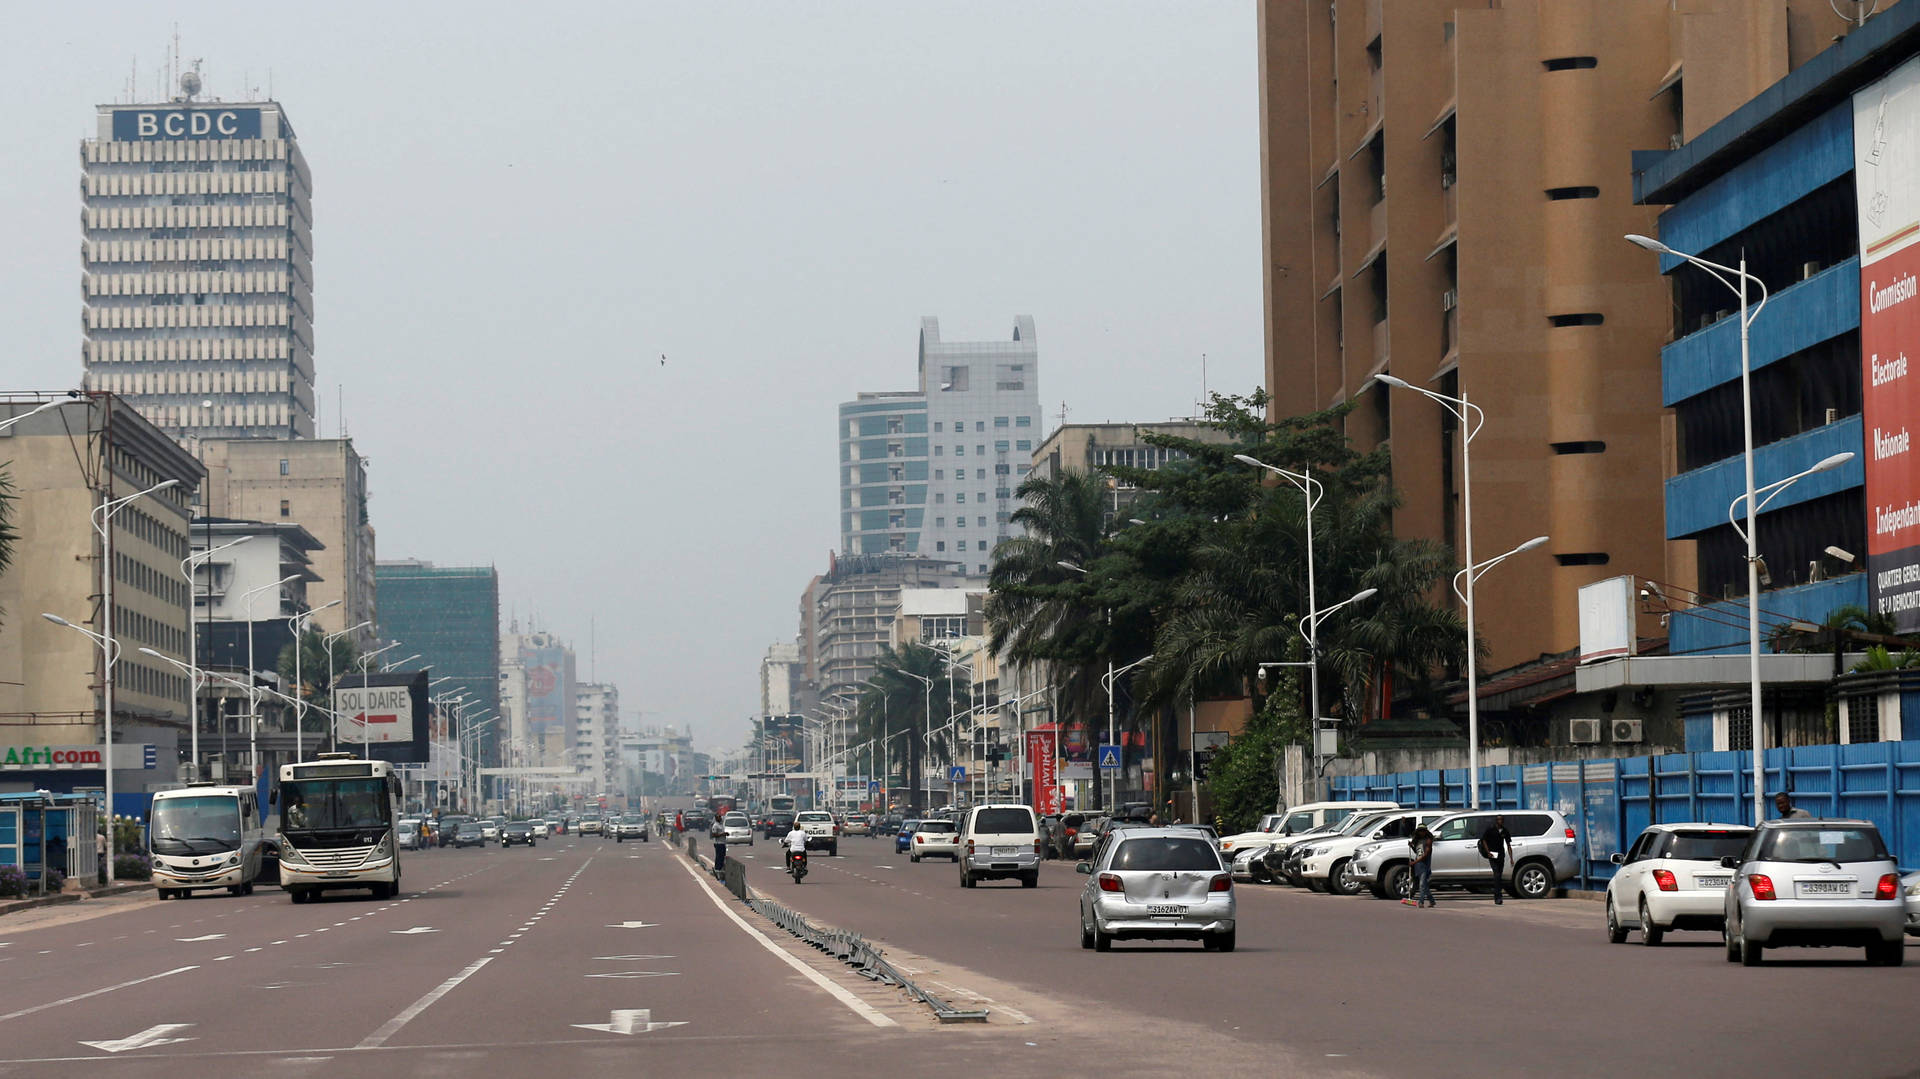 Cityscape View Of Kinshasa, Democratic Republic Of The Congo's Capital Background